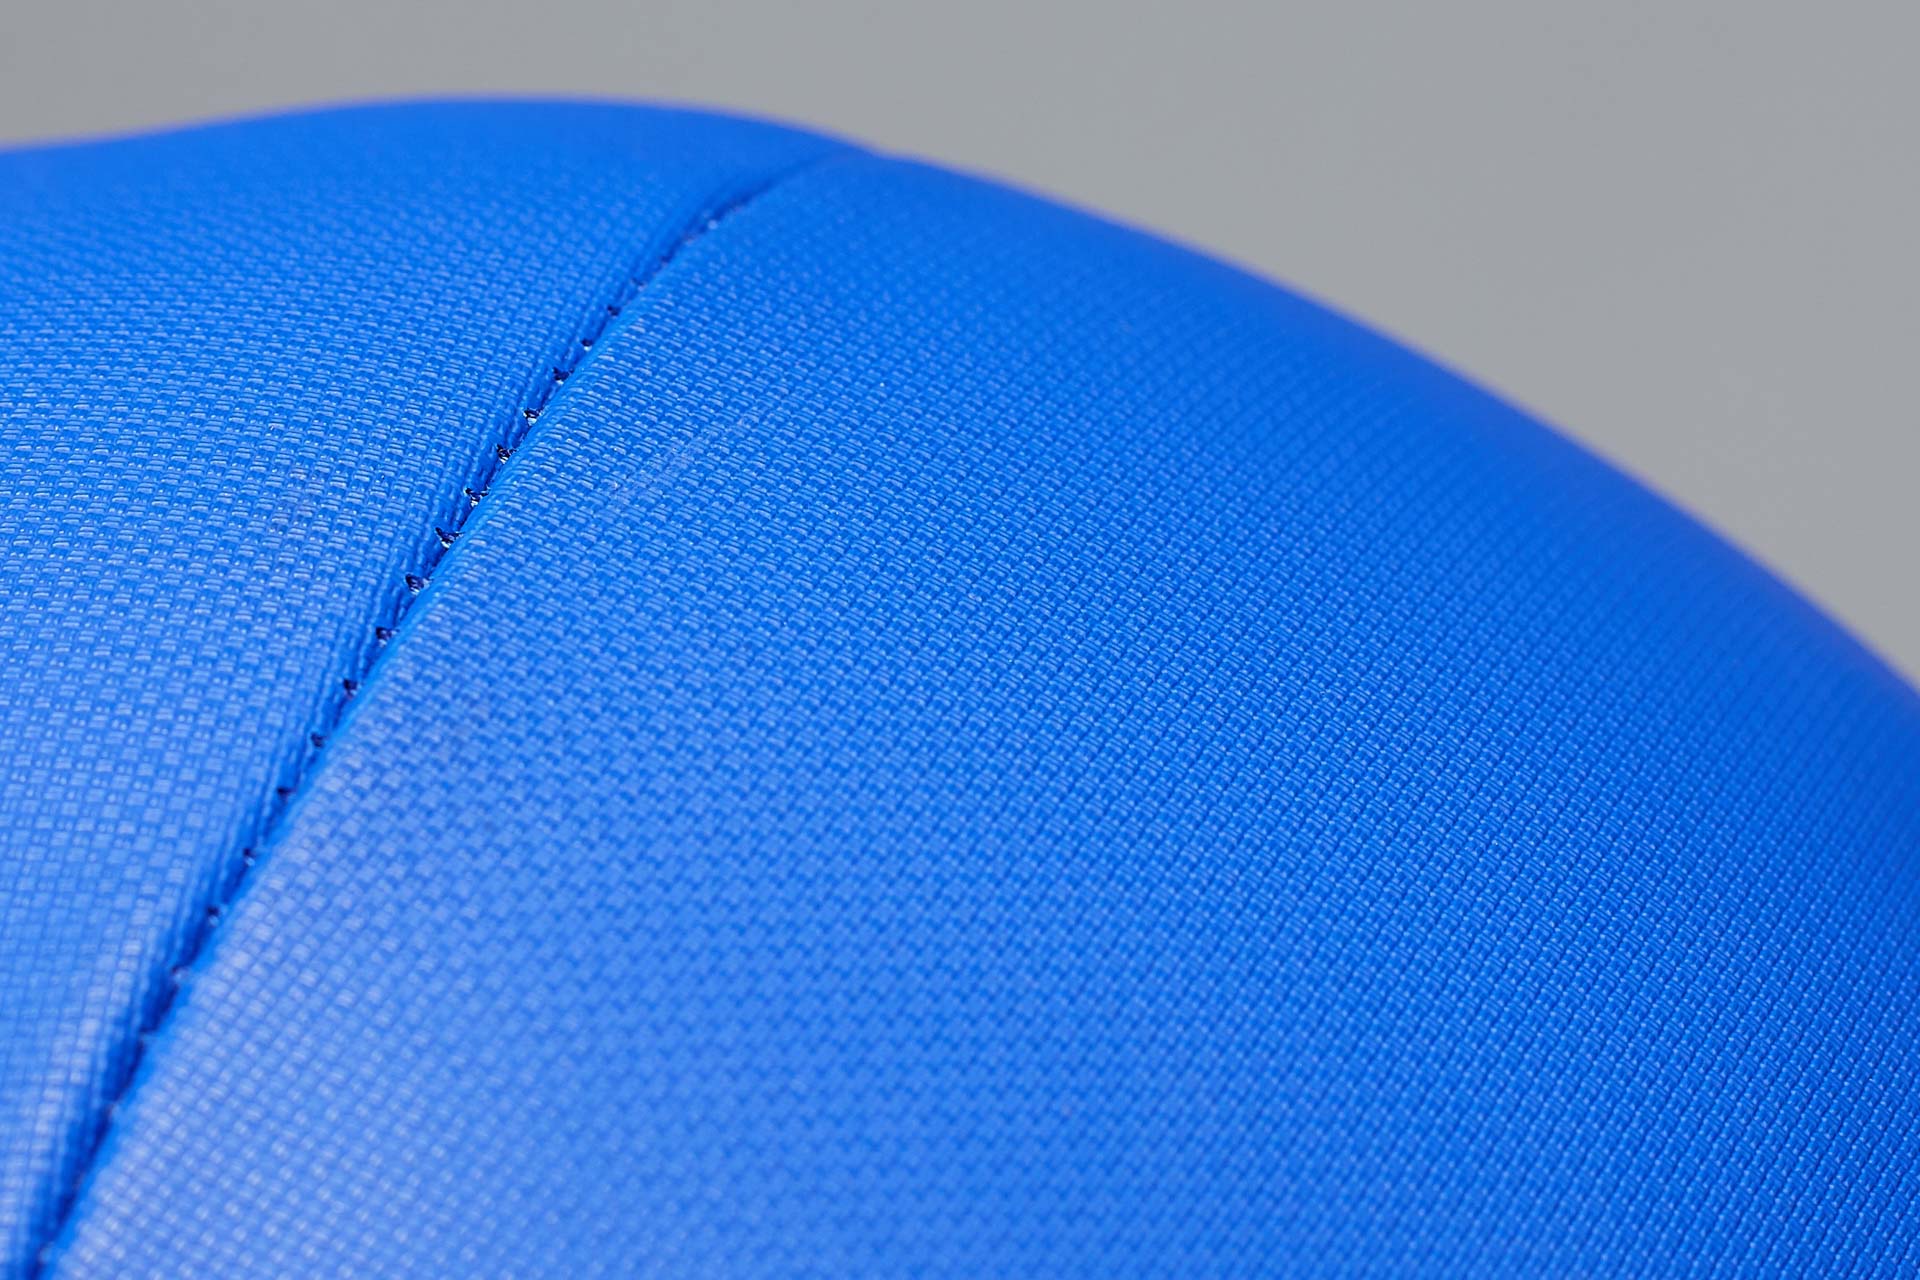 Close-up of medicine ball surface